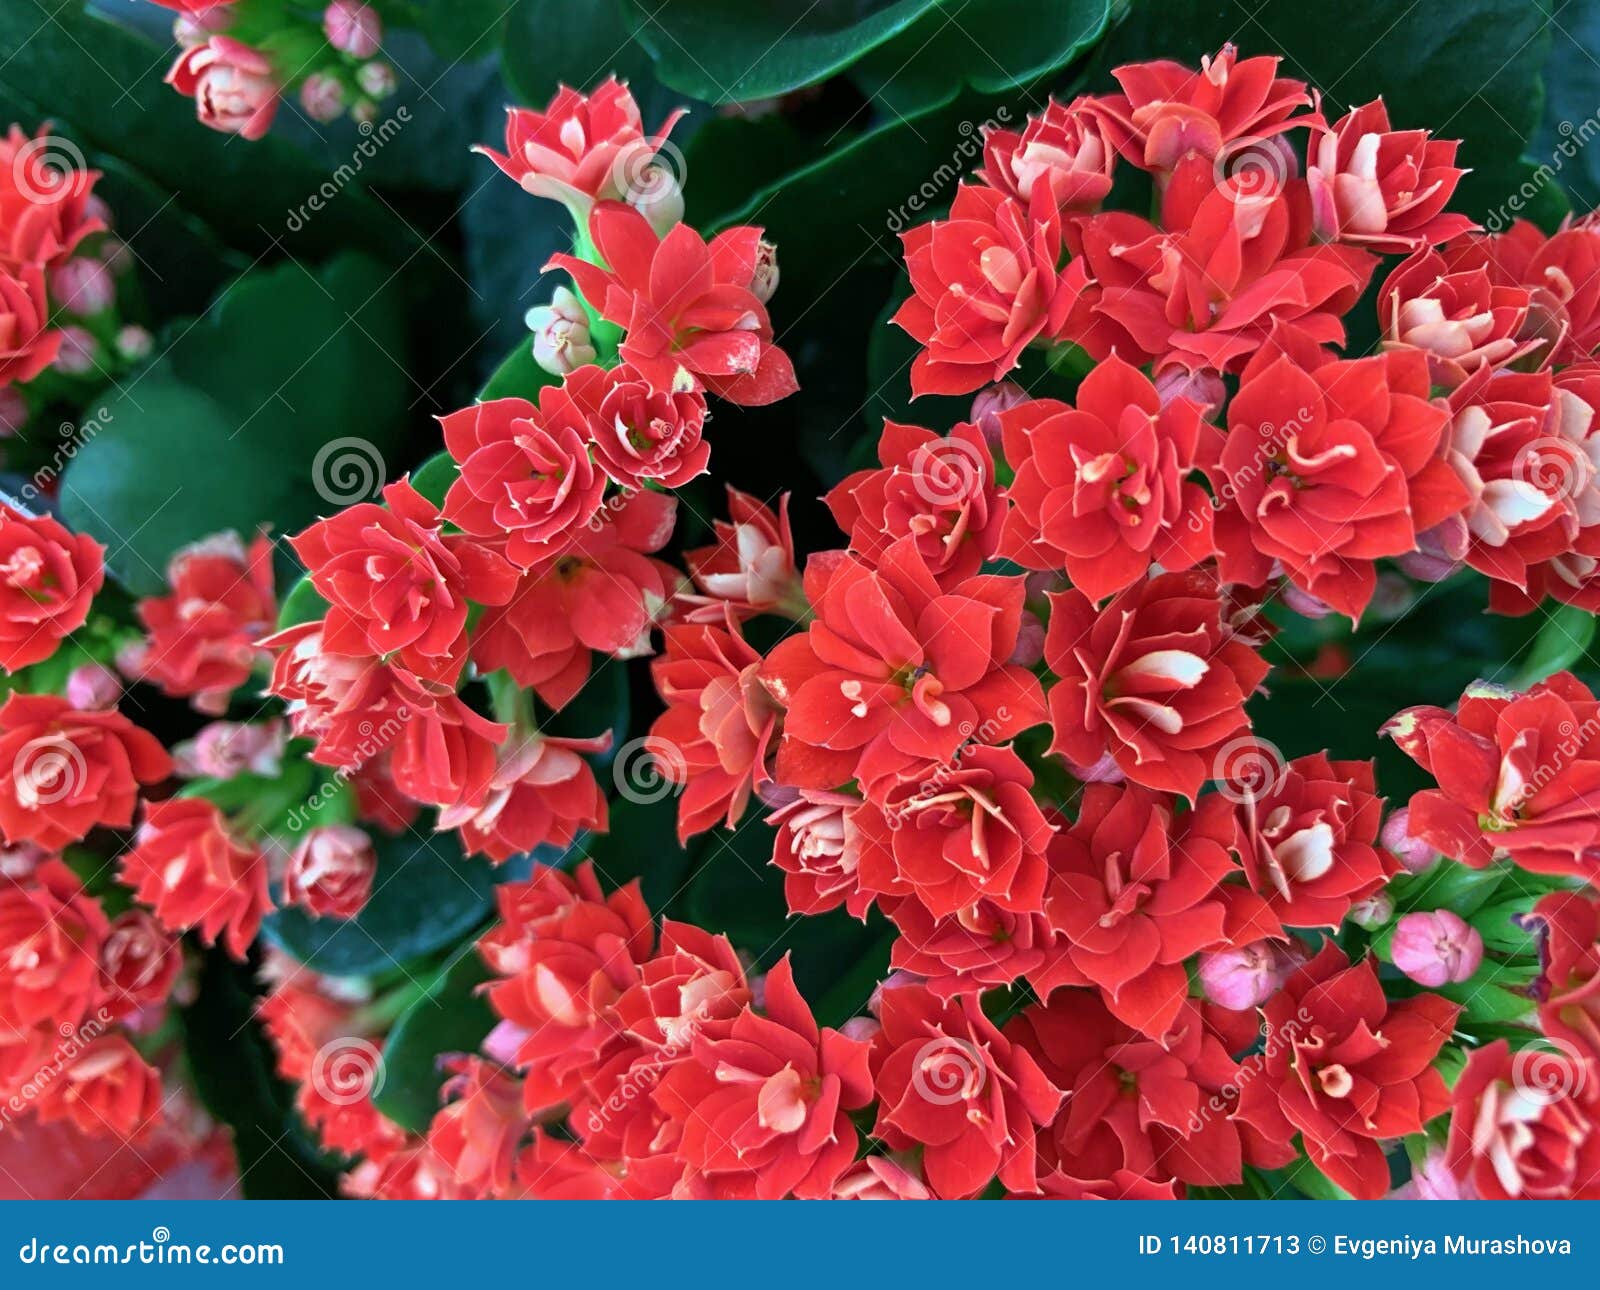 Fiori Kalanchoe.Houseplant With Bright Red Flowers Kalanchoe Stock Image Image